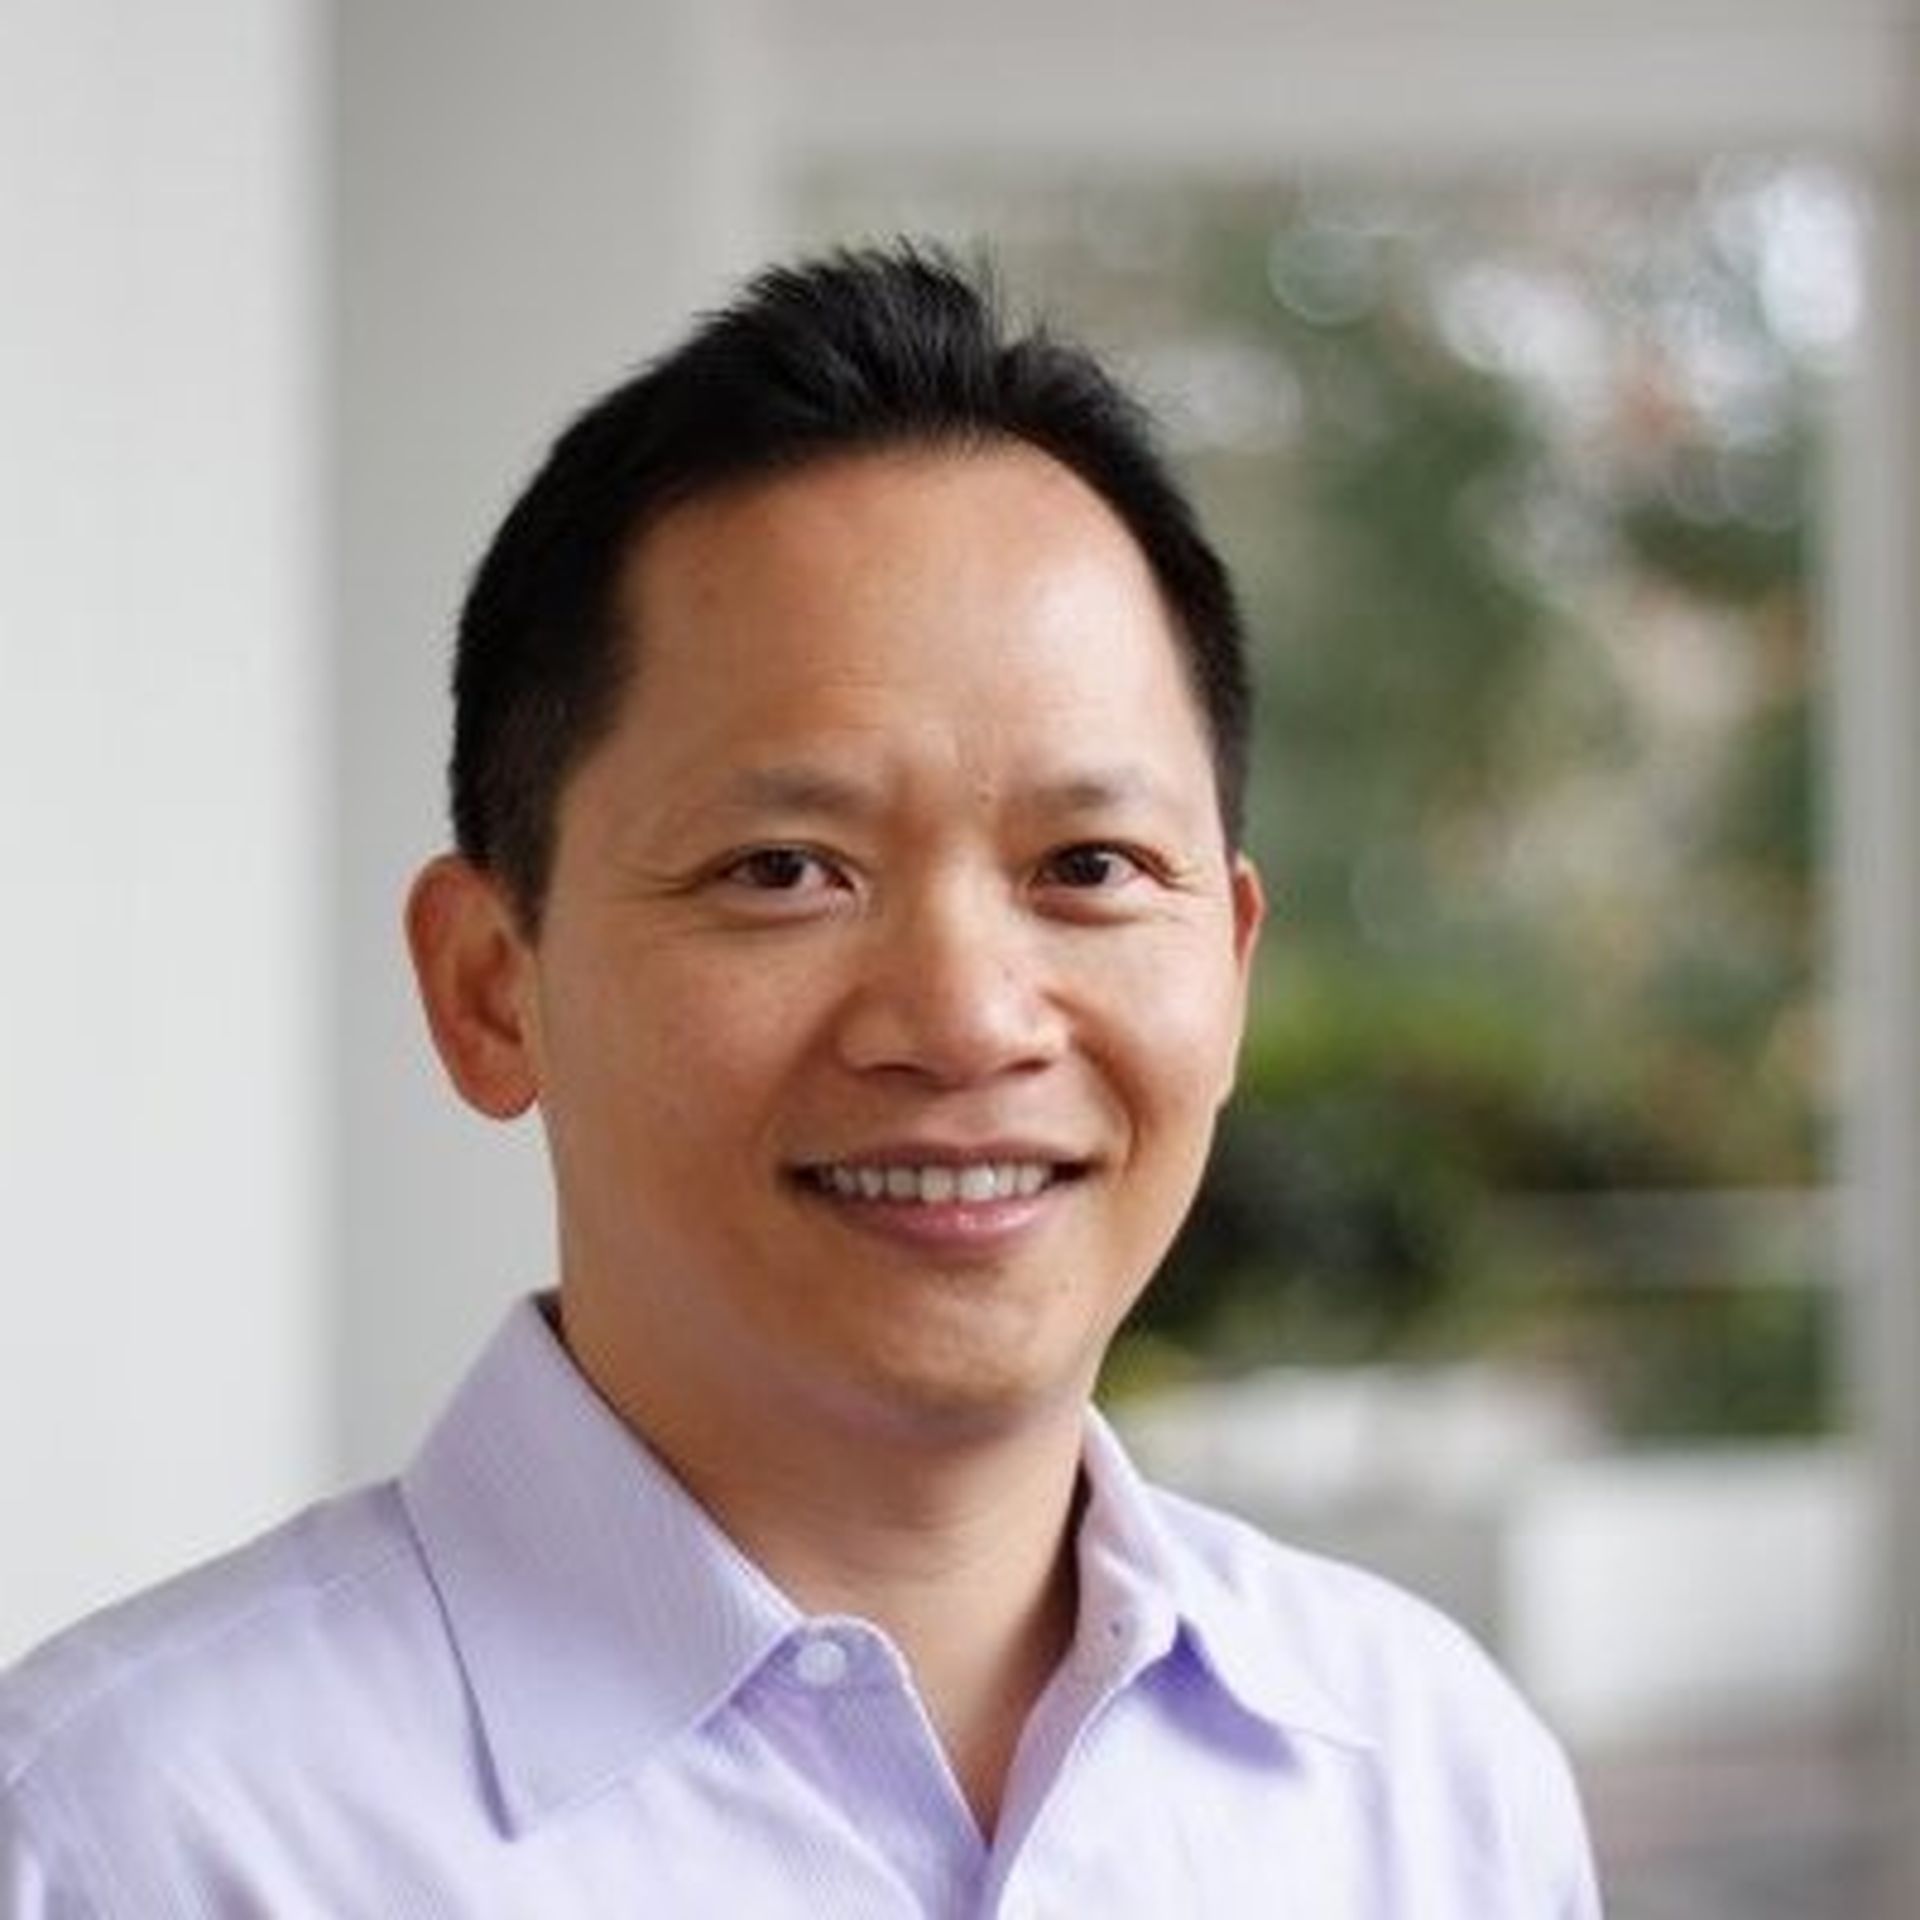 LinkedIn: Splashtop CEO Mark Lee